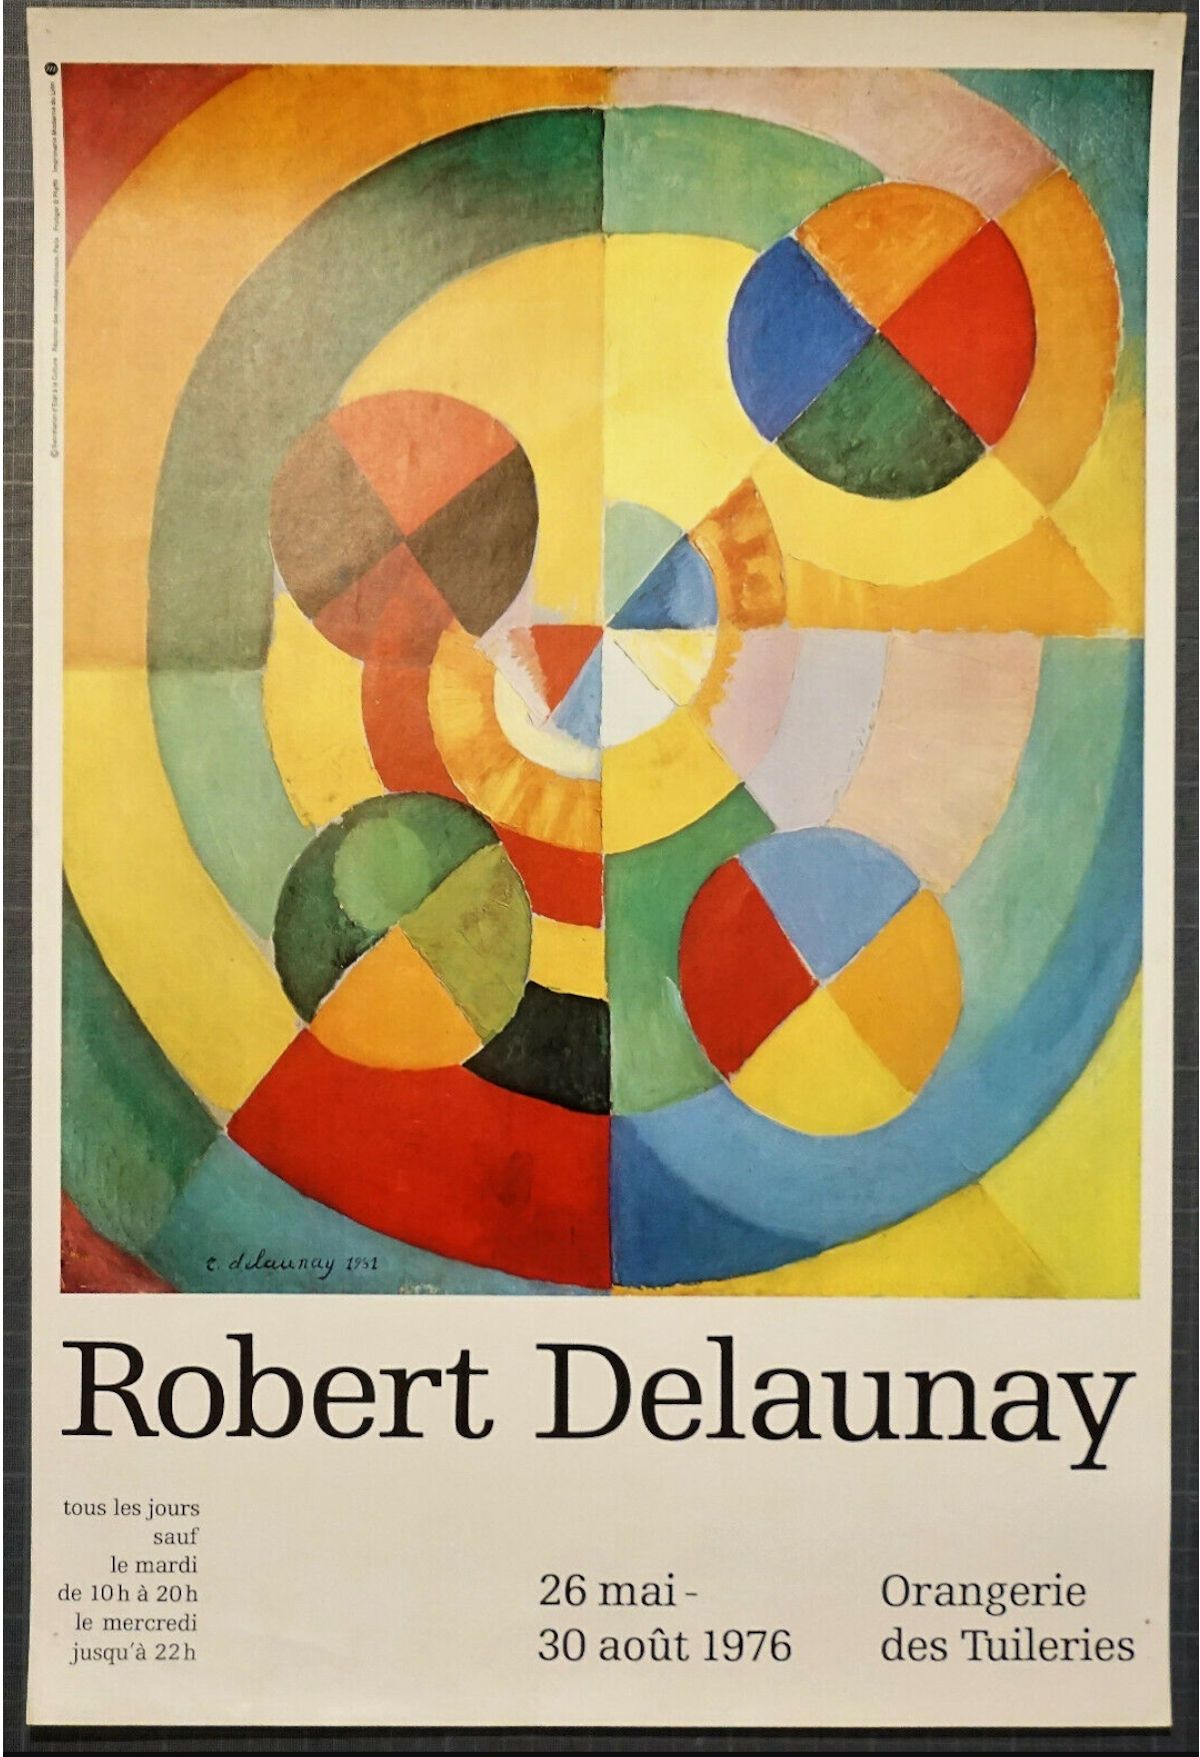 Robert DELAUNAY Robert DELAUNAY

在桔园的展览，1976年

1976年在巴黎杜乐丽公园举办的罗伯特-德劳内作品展的原始海报。
&hellip;